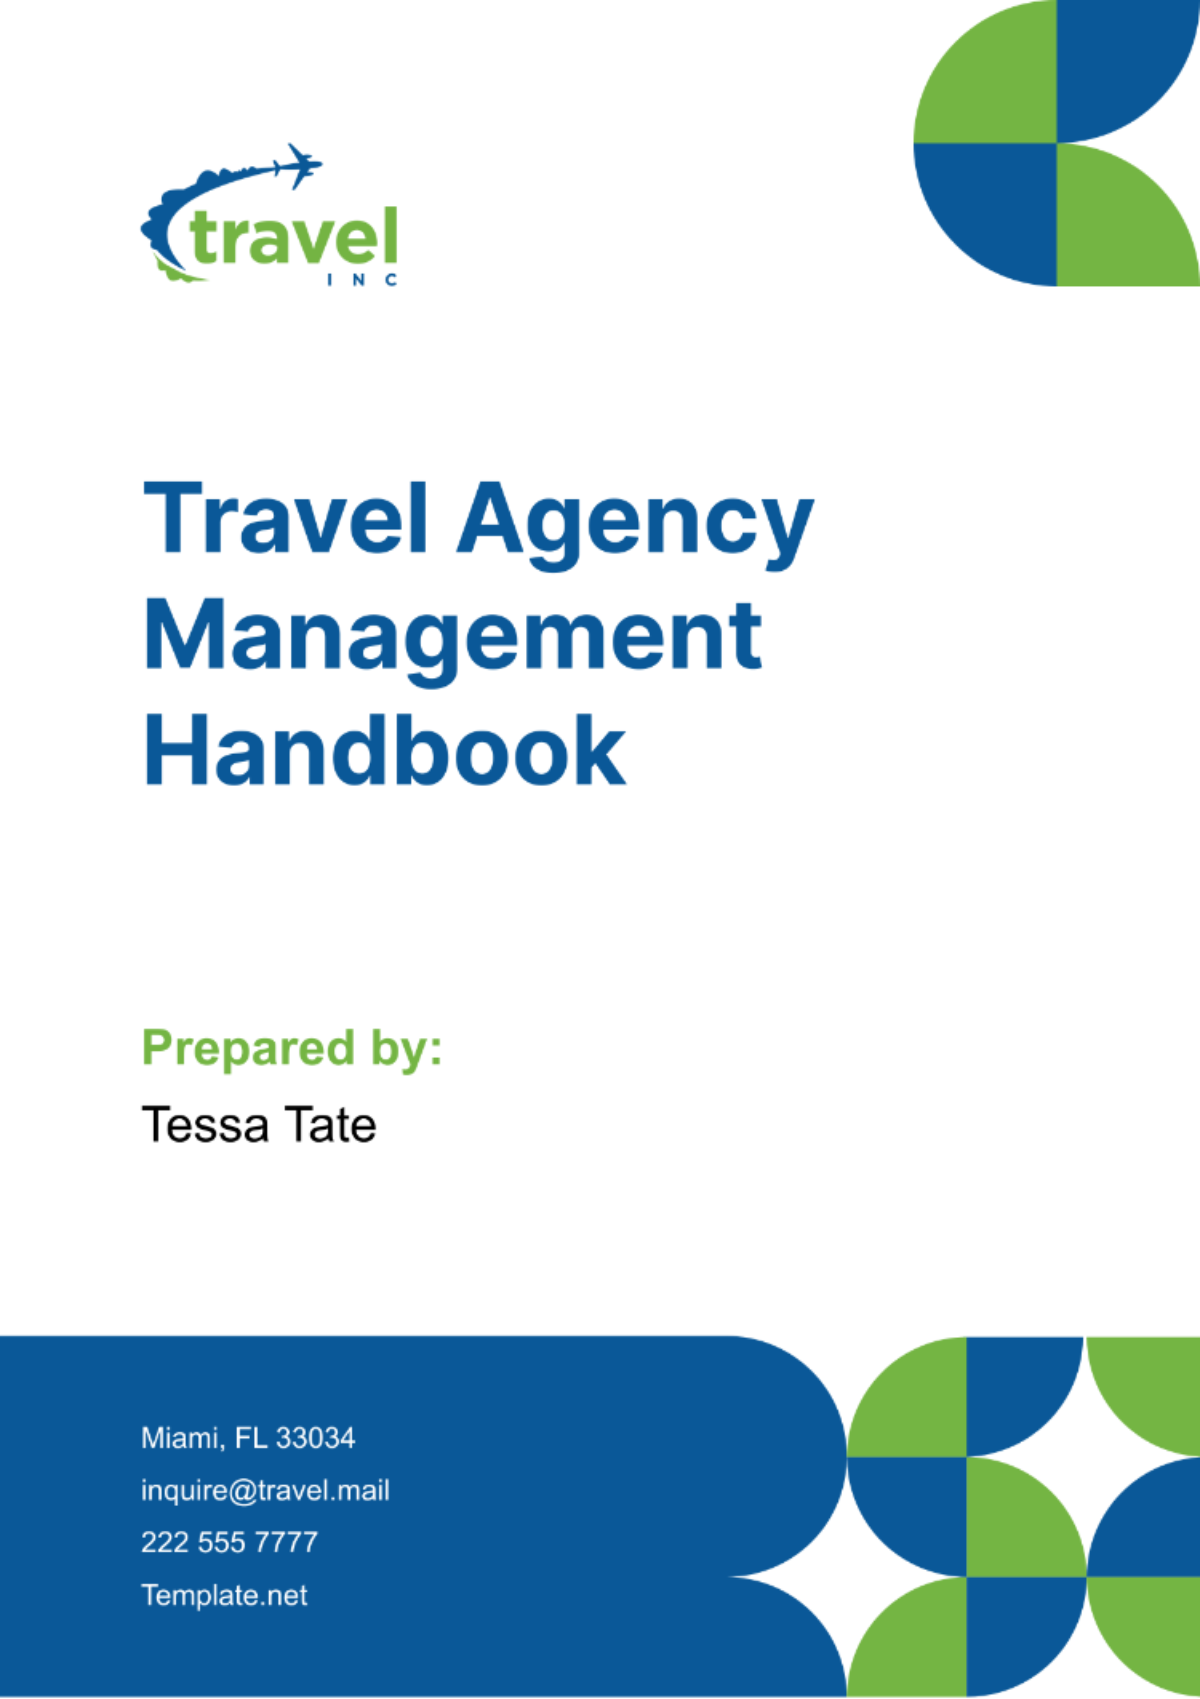 Travel Agency Management Handbook Template